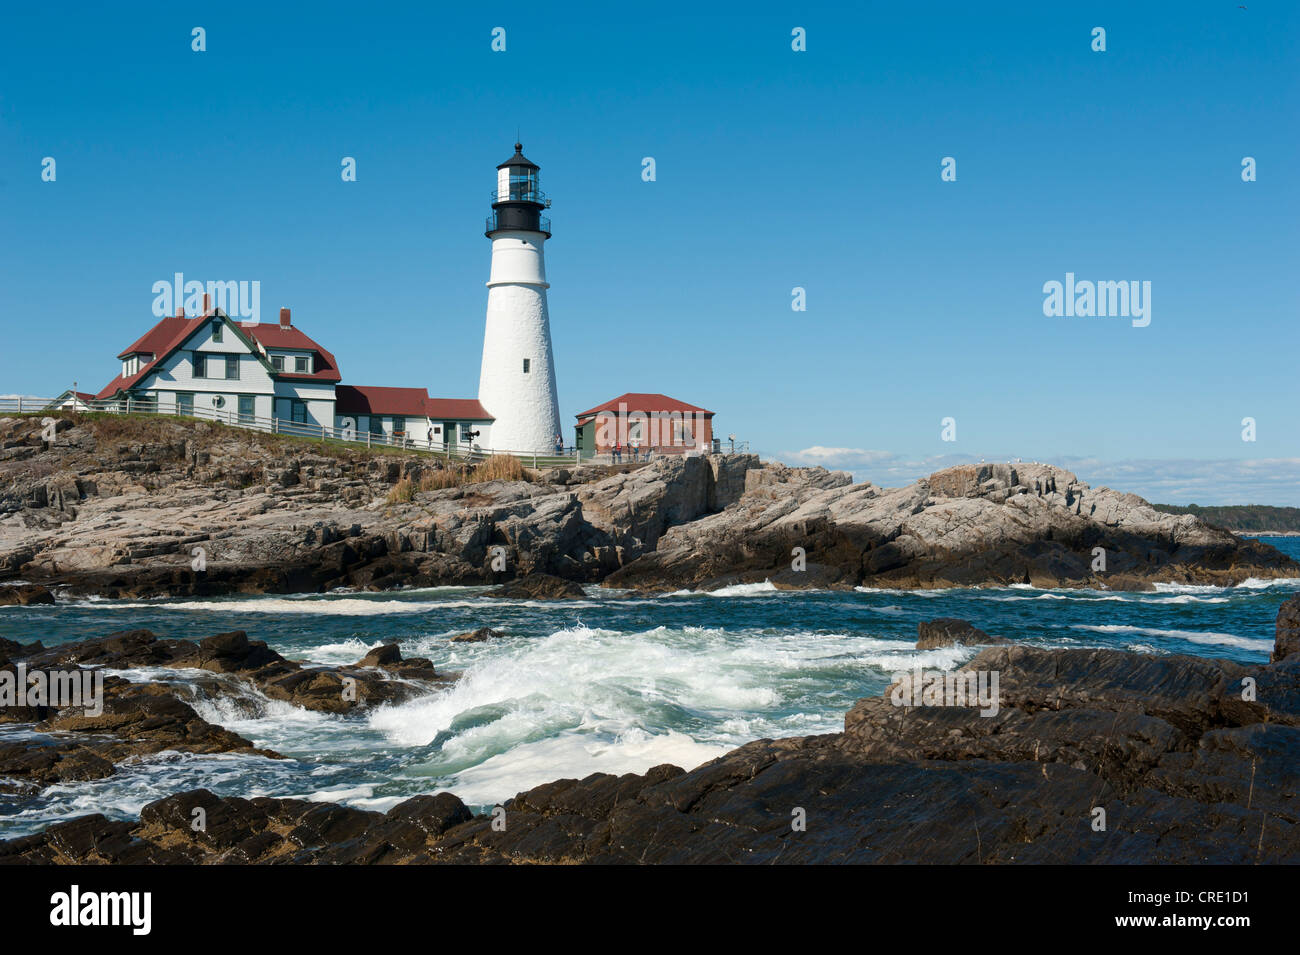 White lighthouse, waves breaking on rocks, Portland Head Light, Portland, Cape Elizabeth, Maine, New England, USA, North America Stock Photo